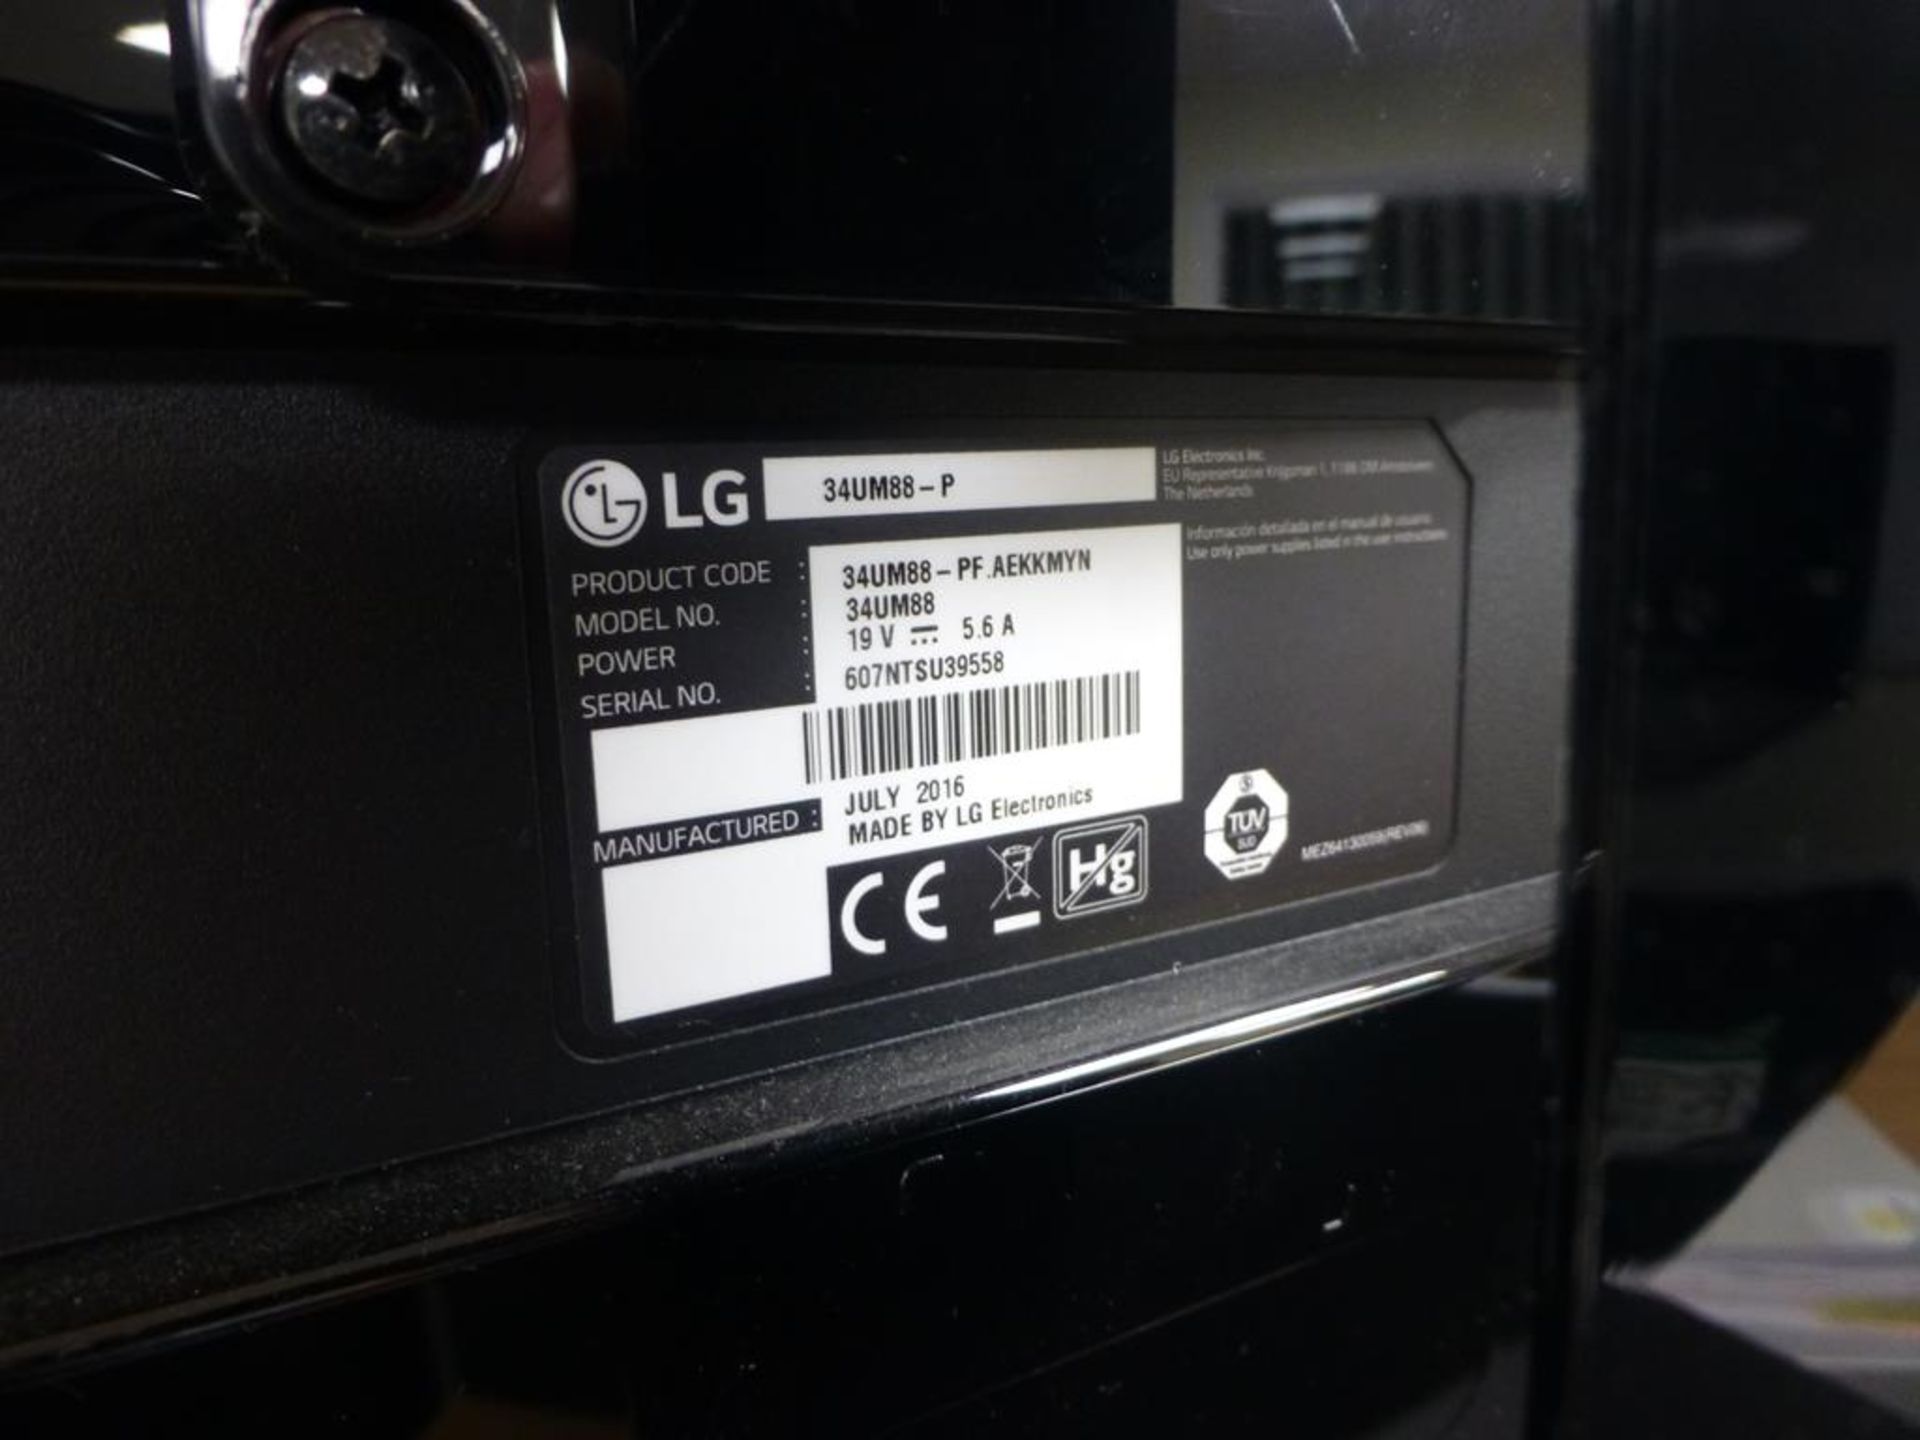 LG 34UM88-P widescreen LCD display - Bild 2 aus 2